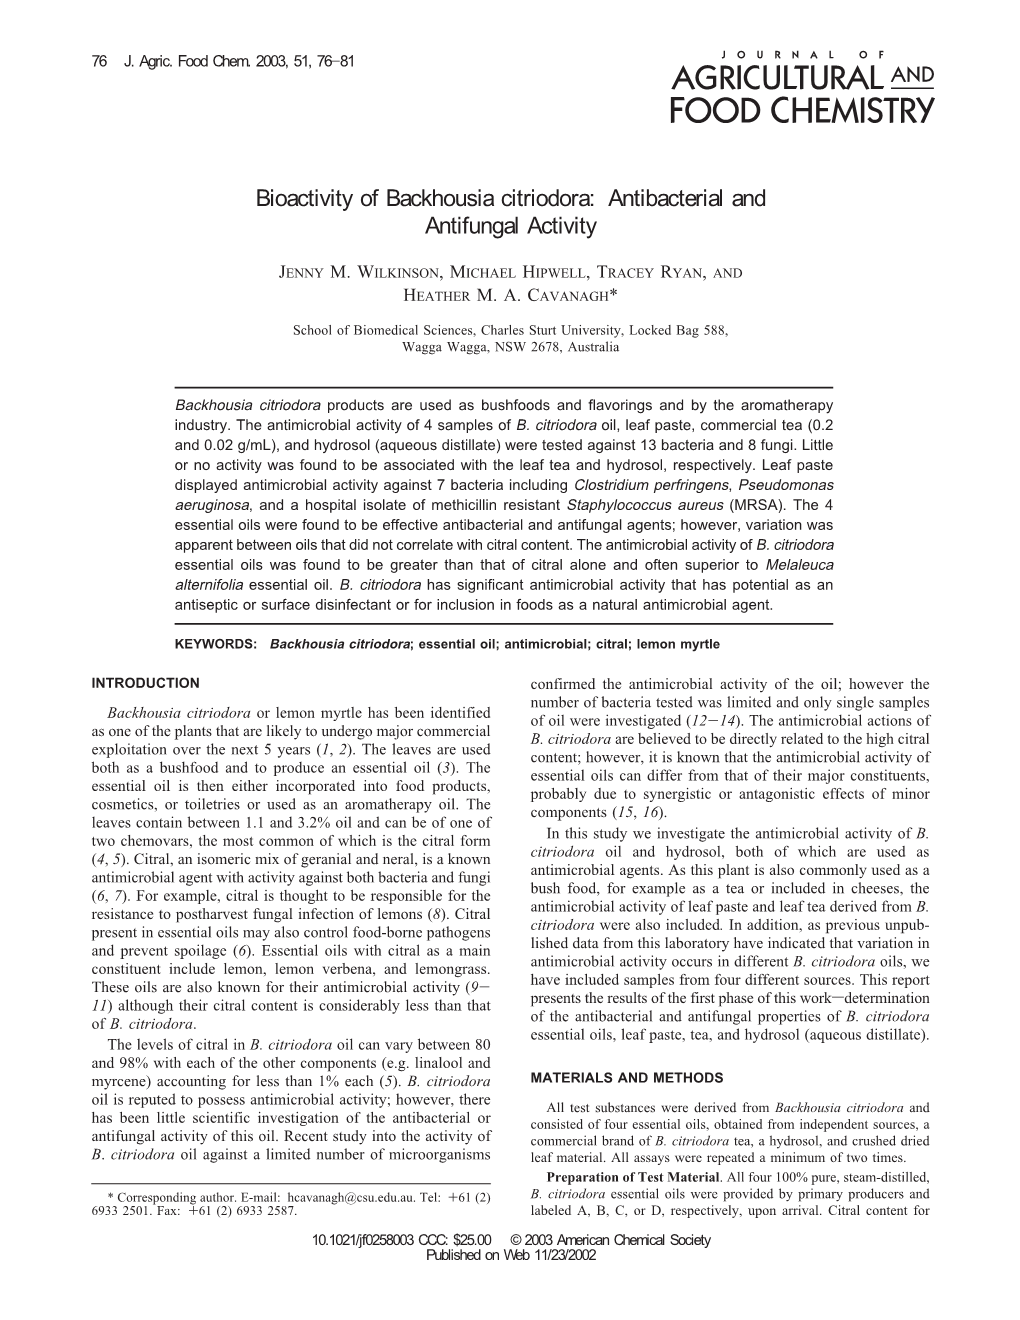 Bioactivity of Backhousia Citriodora: Antibacterial and Antifungal Activity